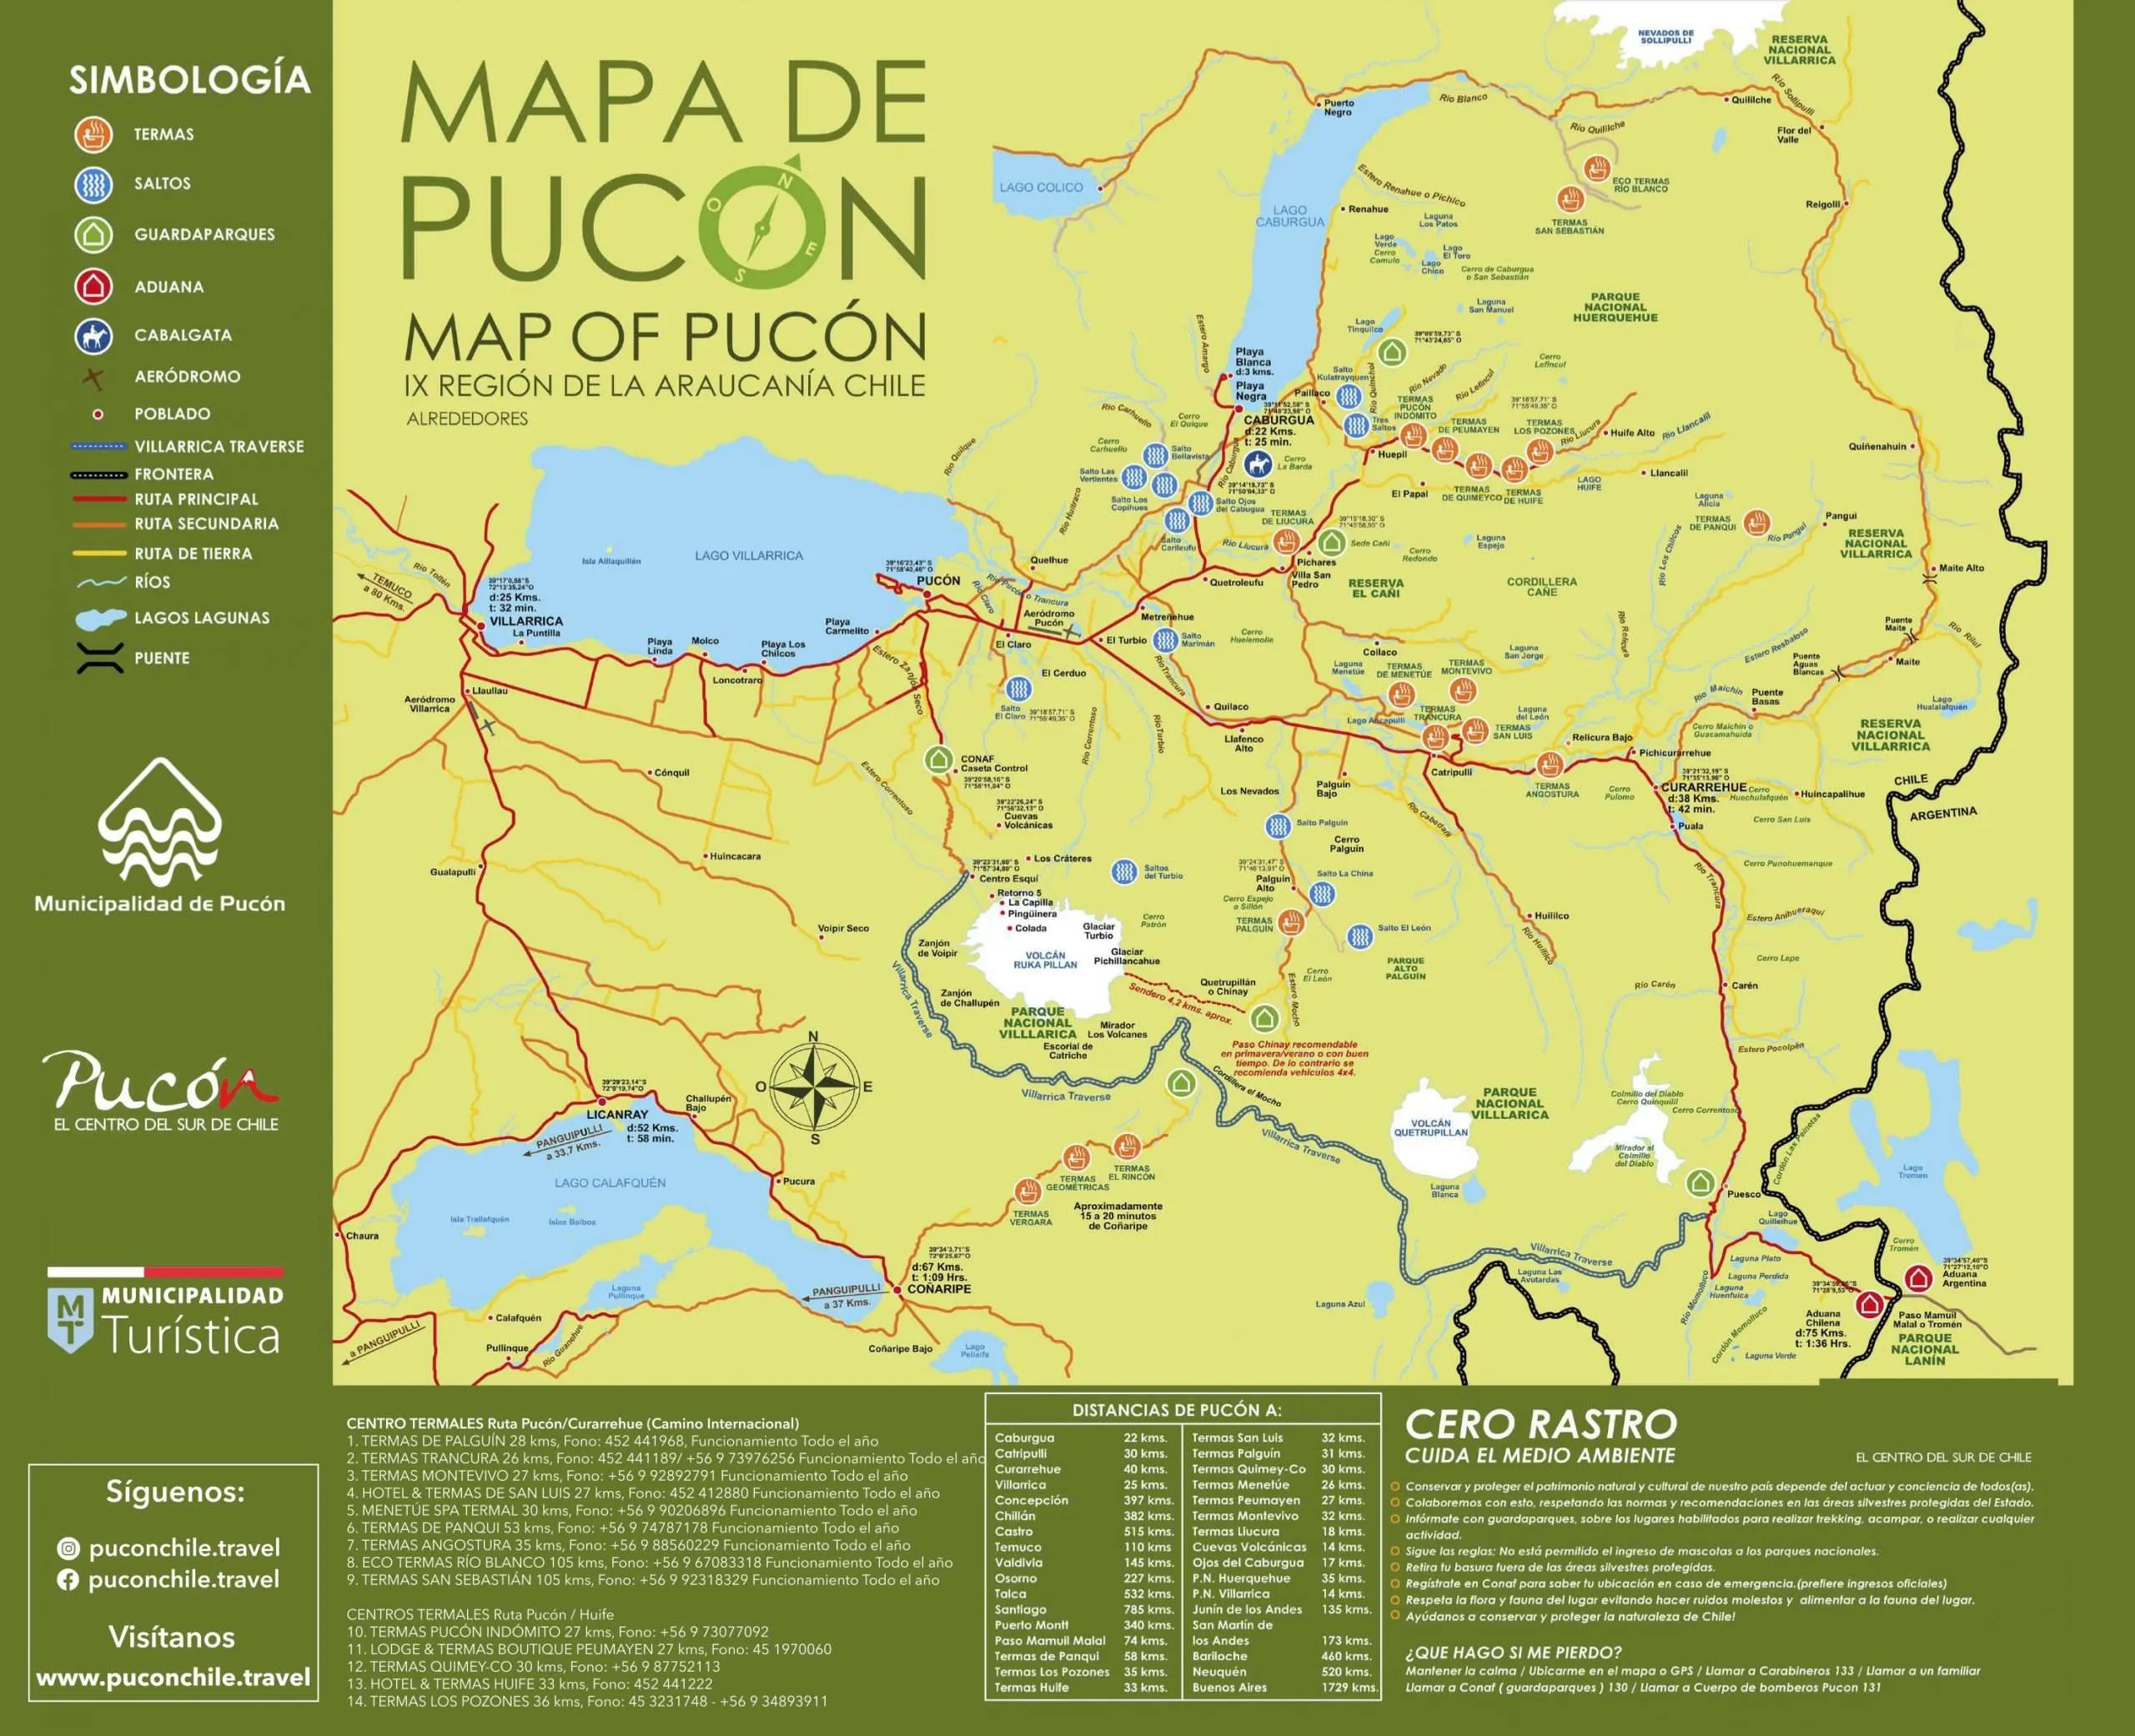 Map of Pucon - карта города Пукон и окрестностей